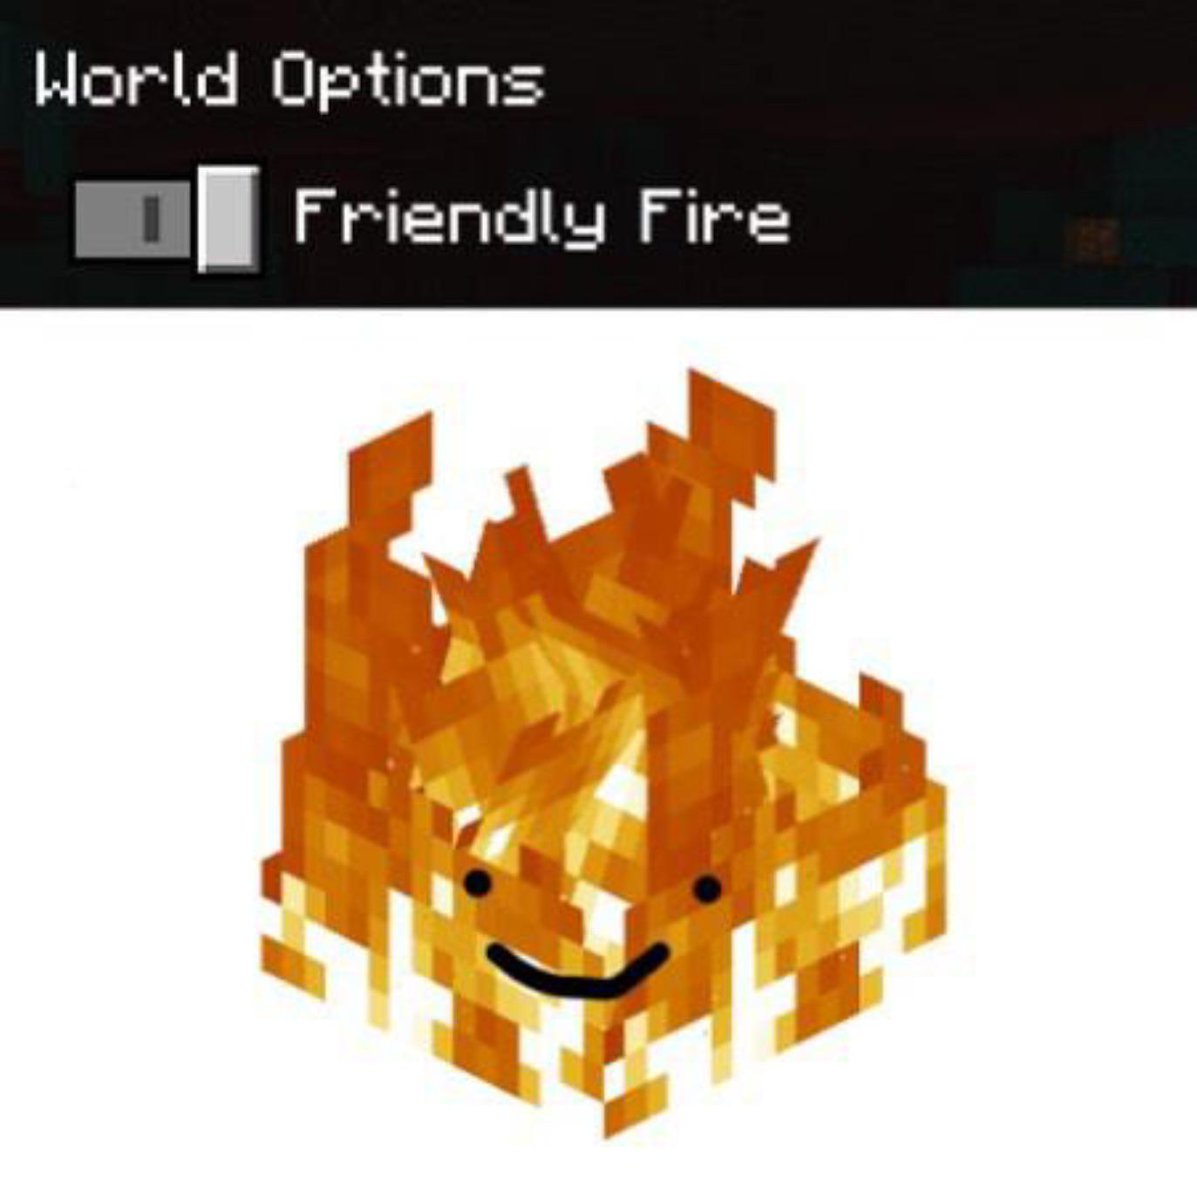 RT @MinecraftMeme16: Friendly fire https://t.co/EZ7vRThyDp